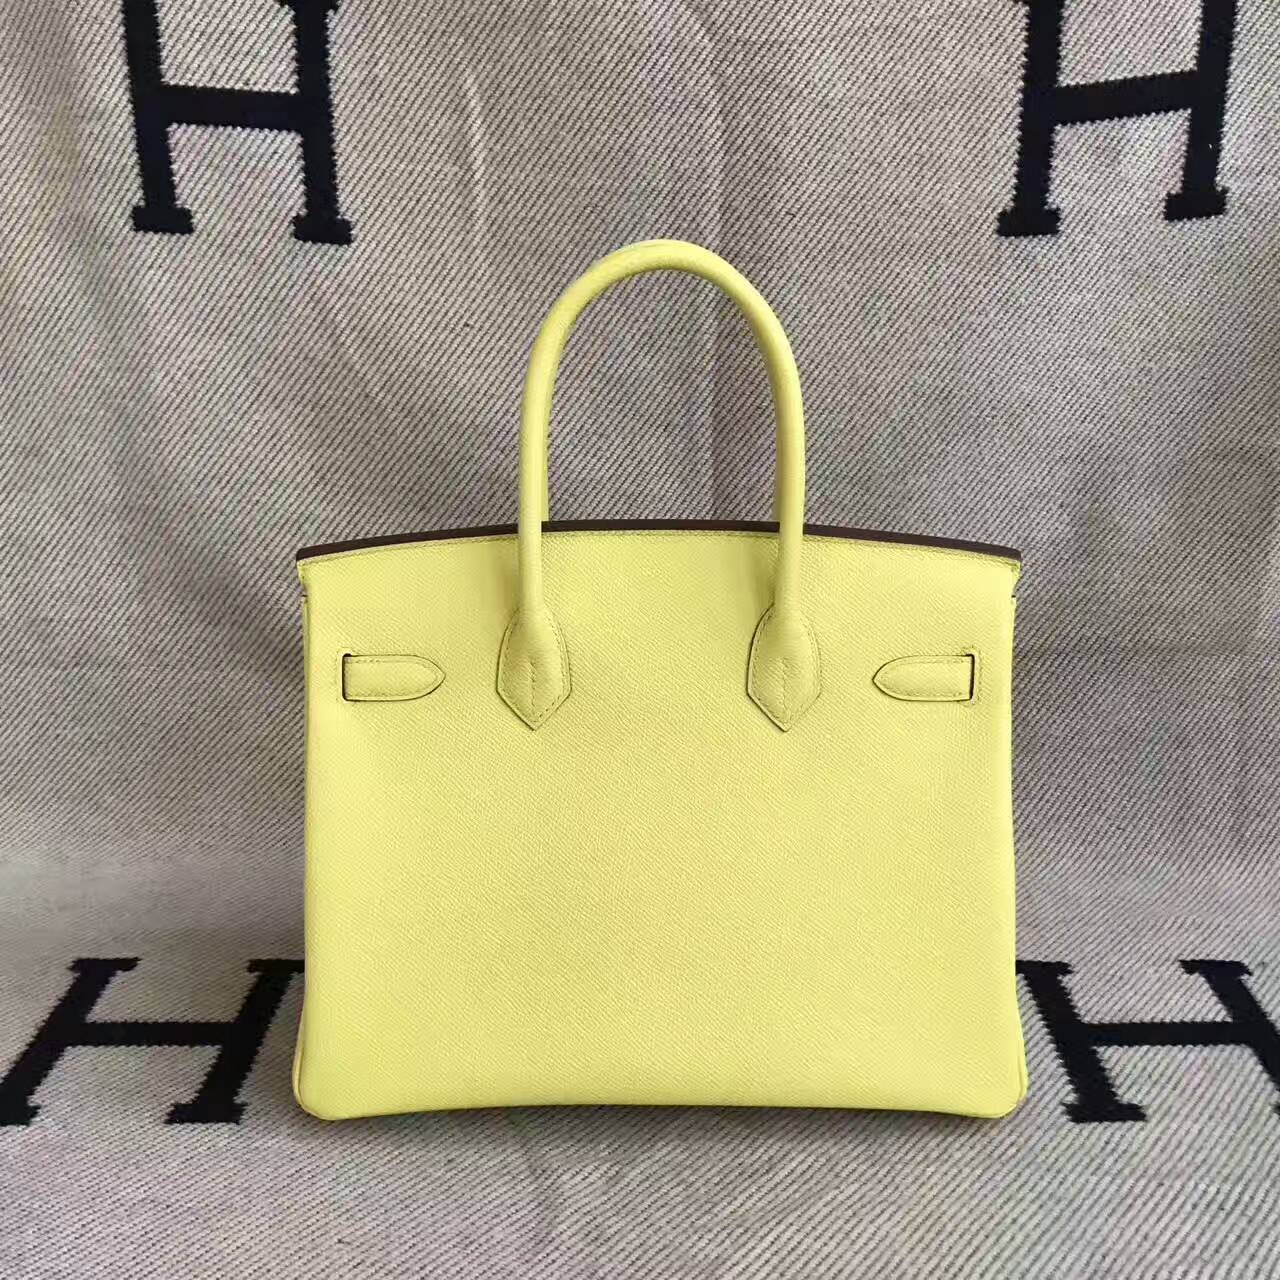 On Sale Hermes Birkin Bag 30cm in 9R Lemon Yellow Epsom Leather